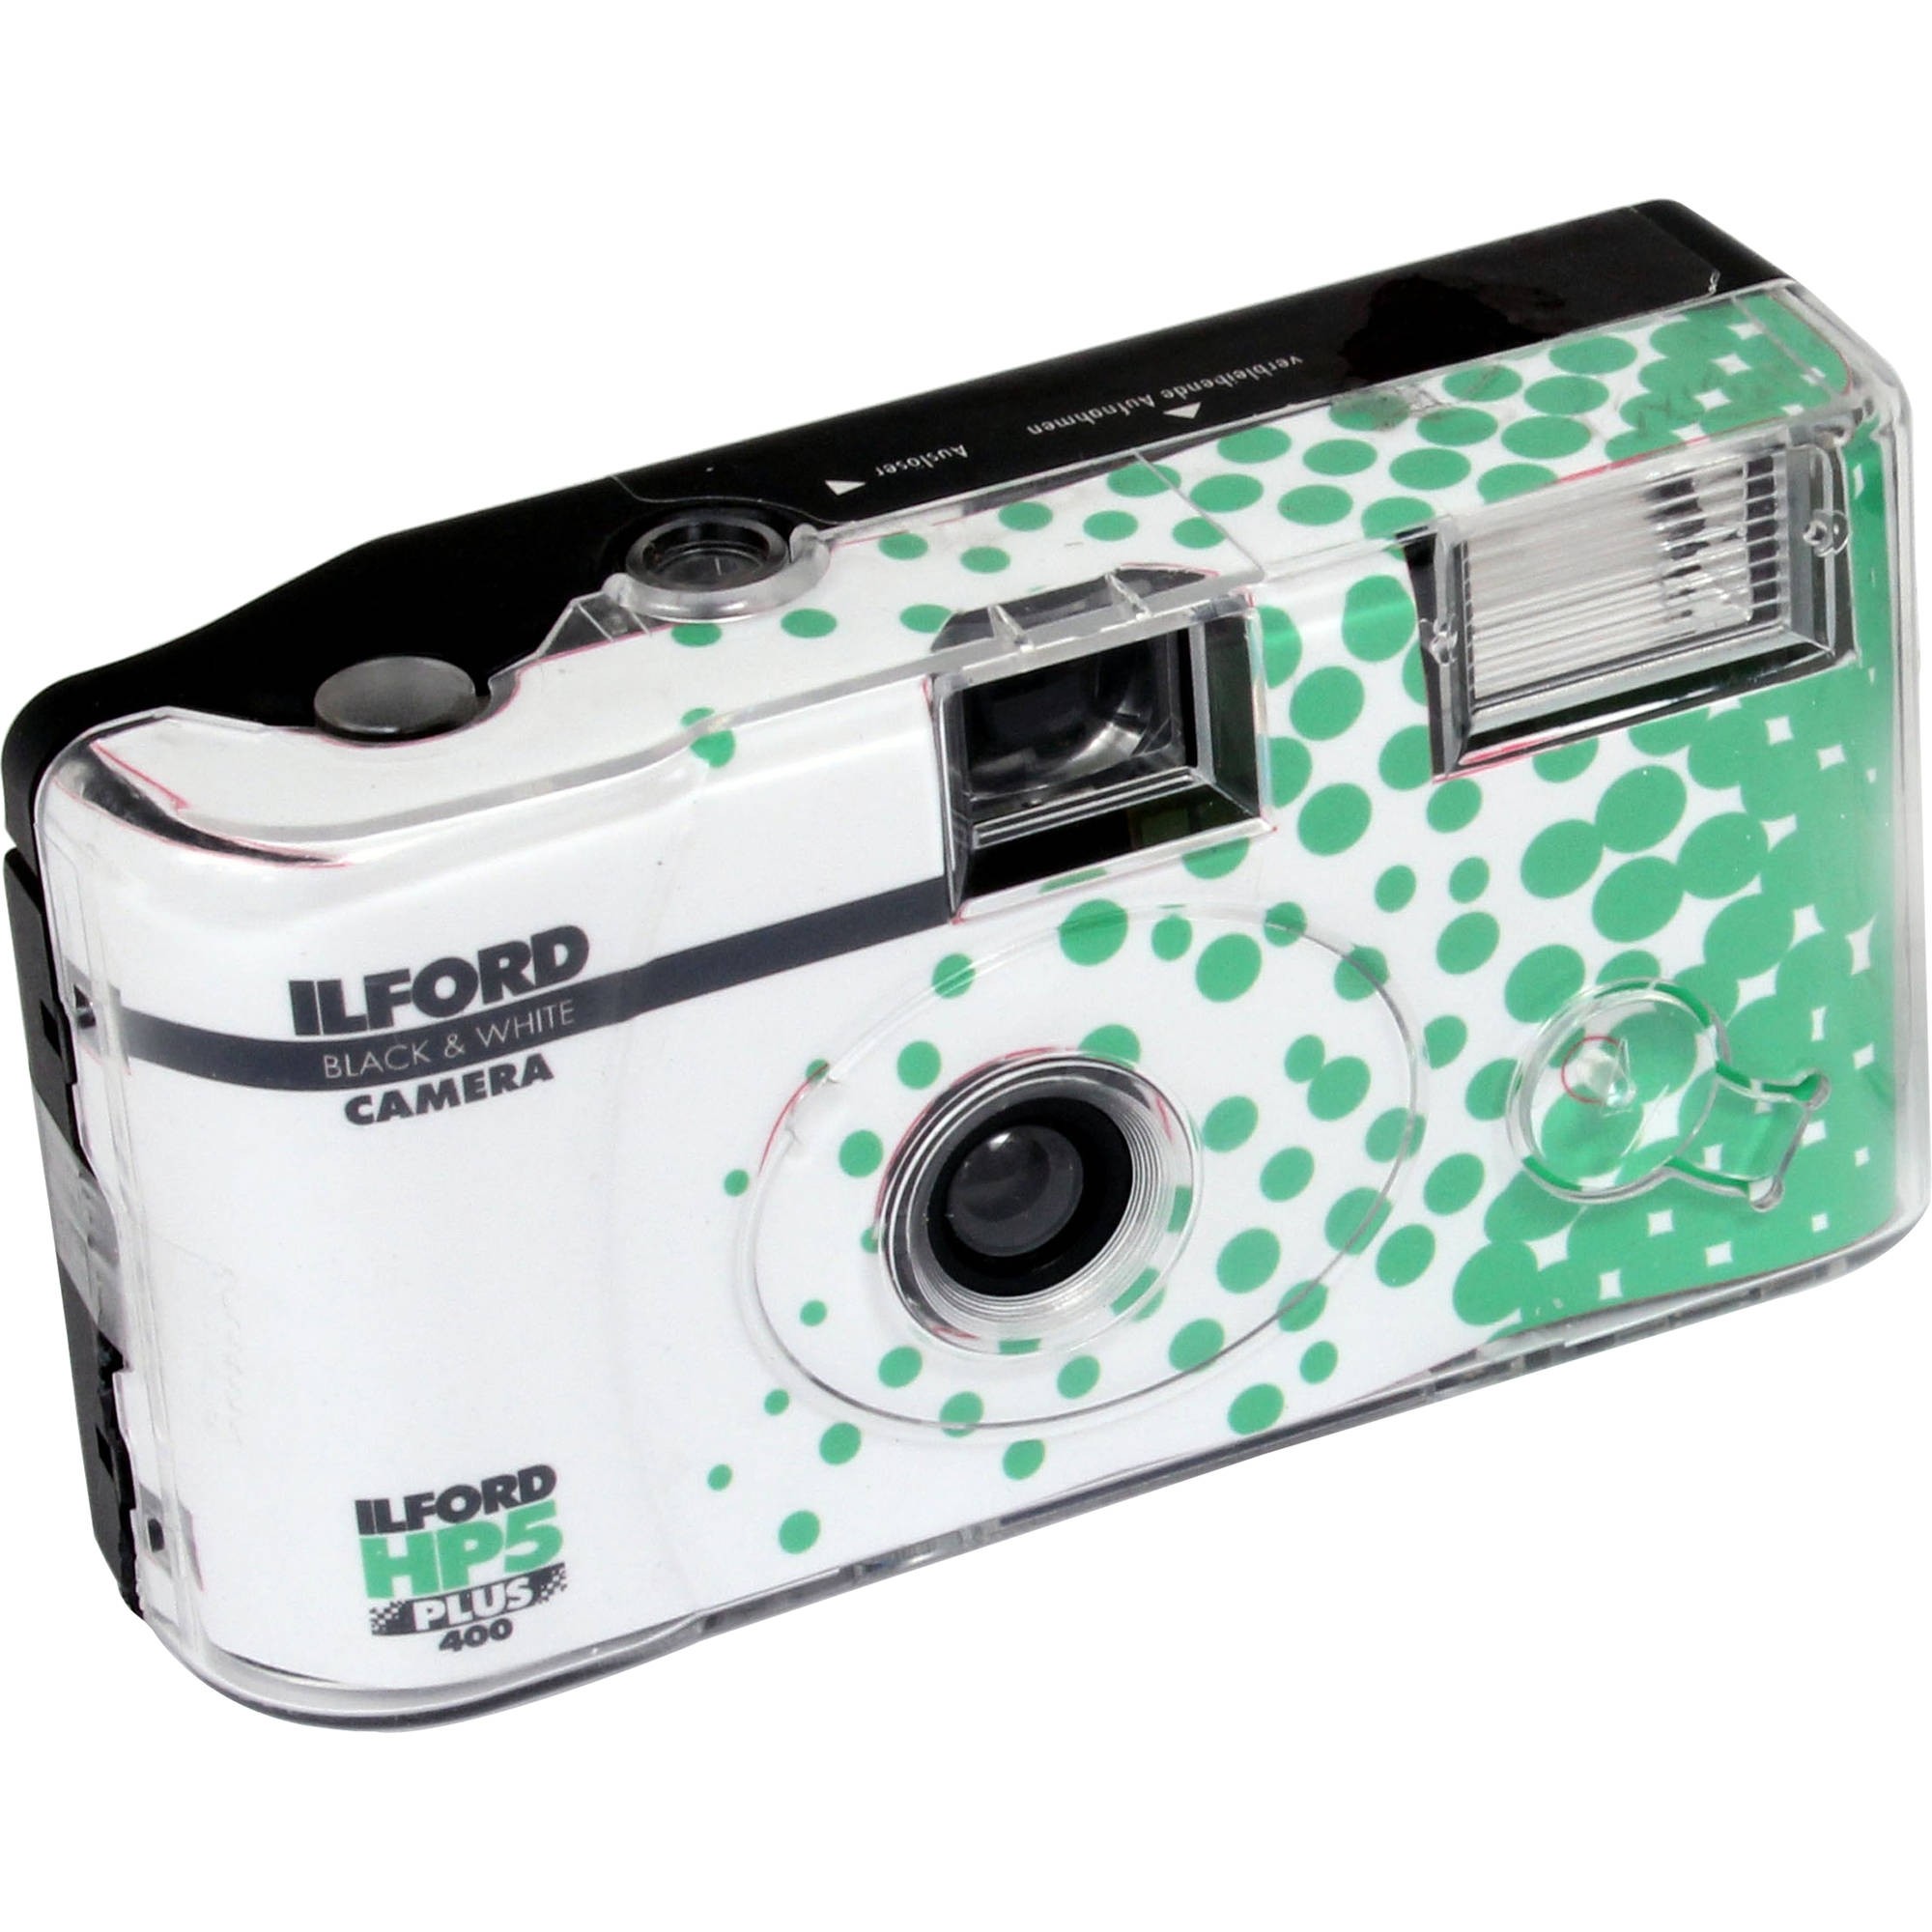 Ilford HP5 Plus wegwerp camera met flits 27exp